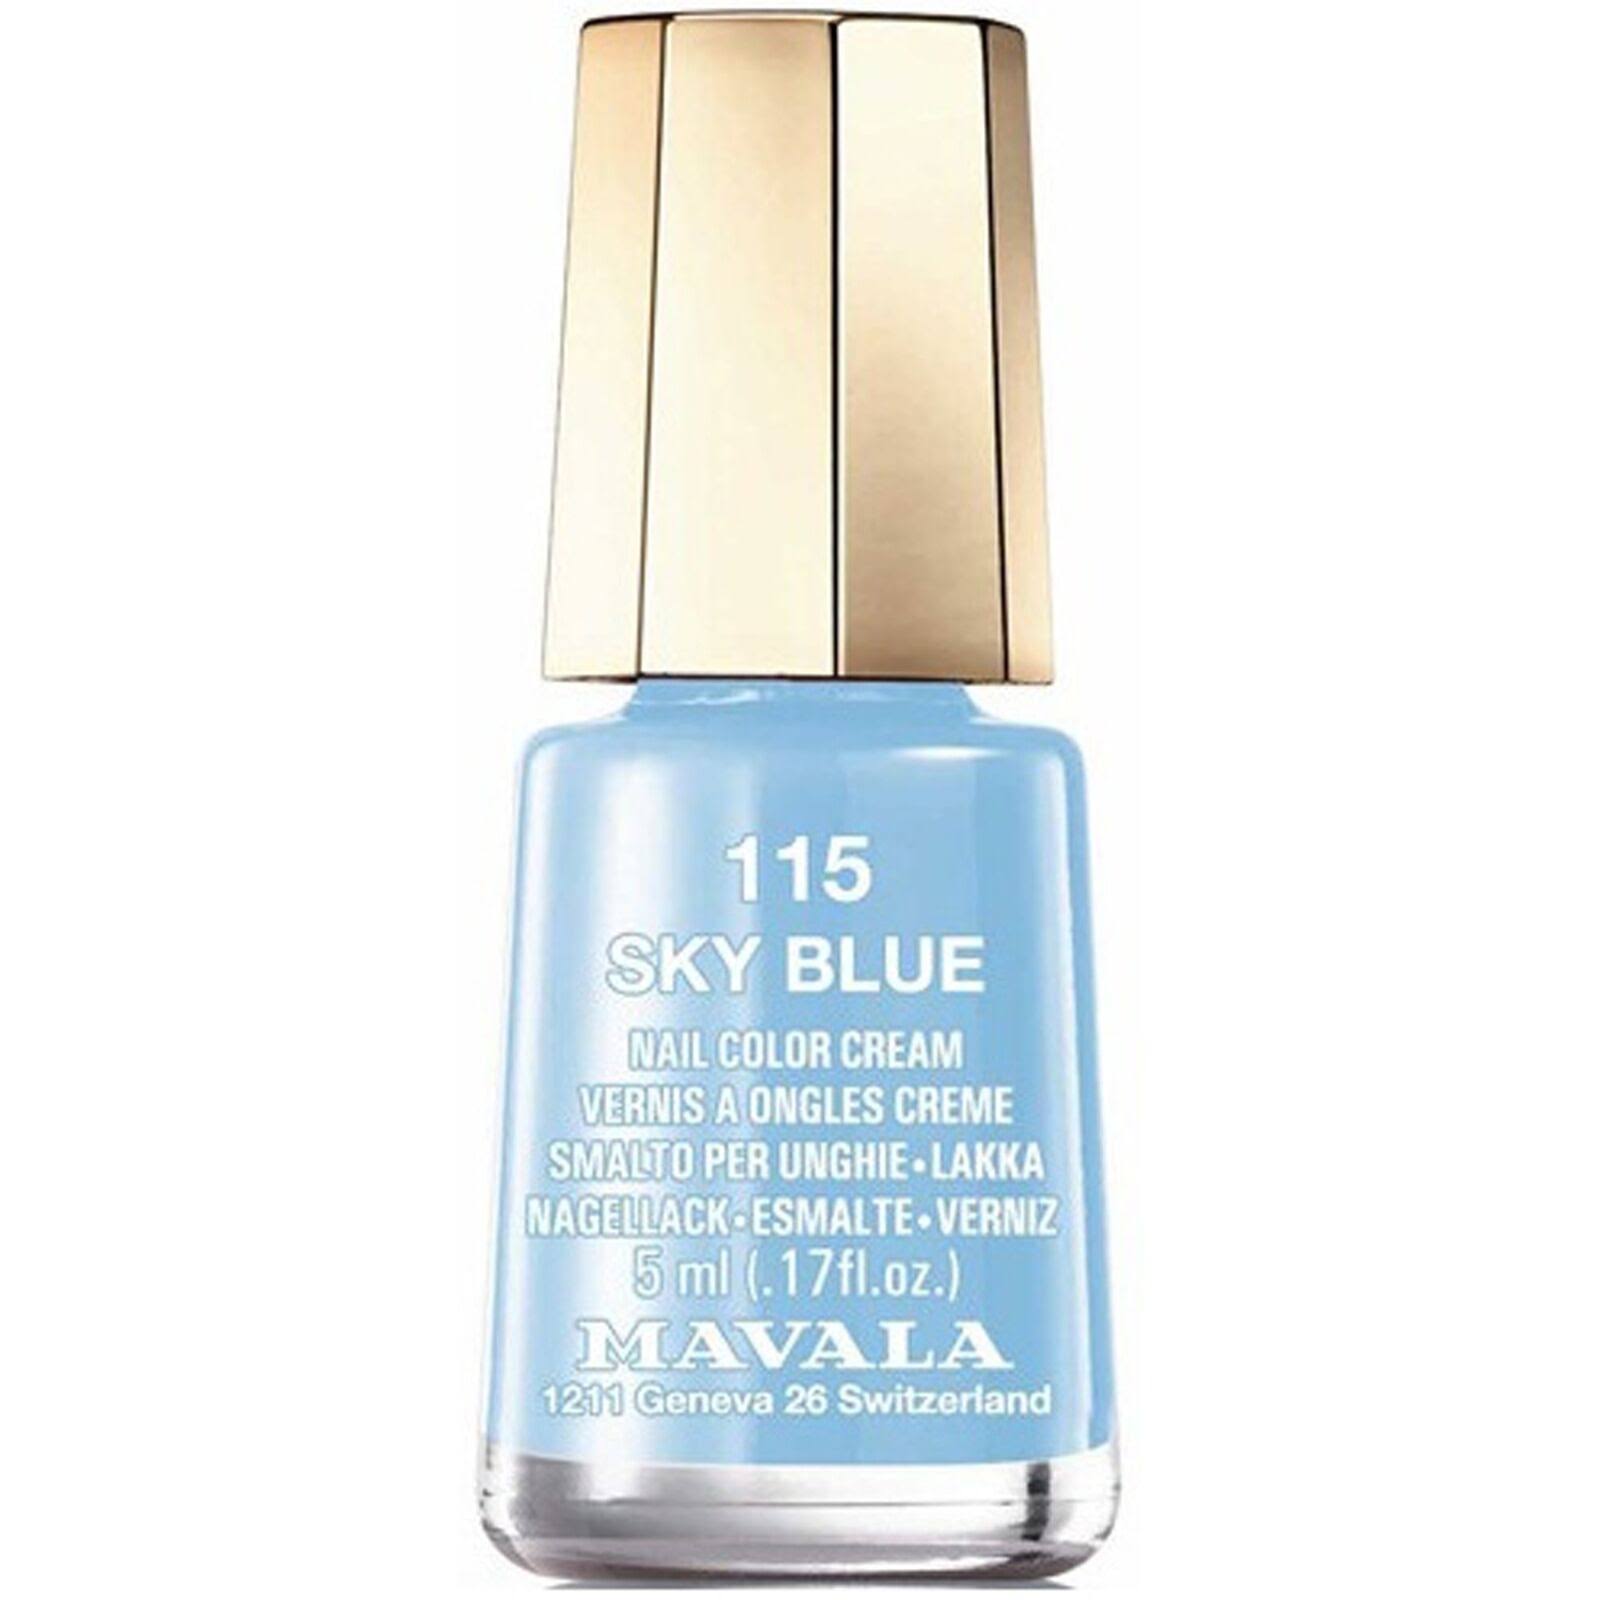 Mavala Nail Color Cream - 115 Sky Blue, 5ml